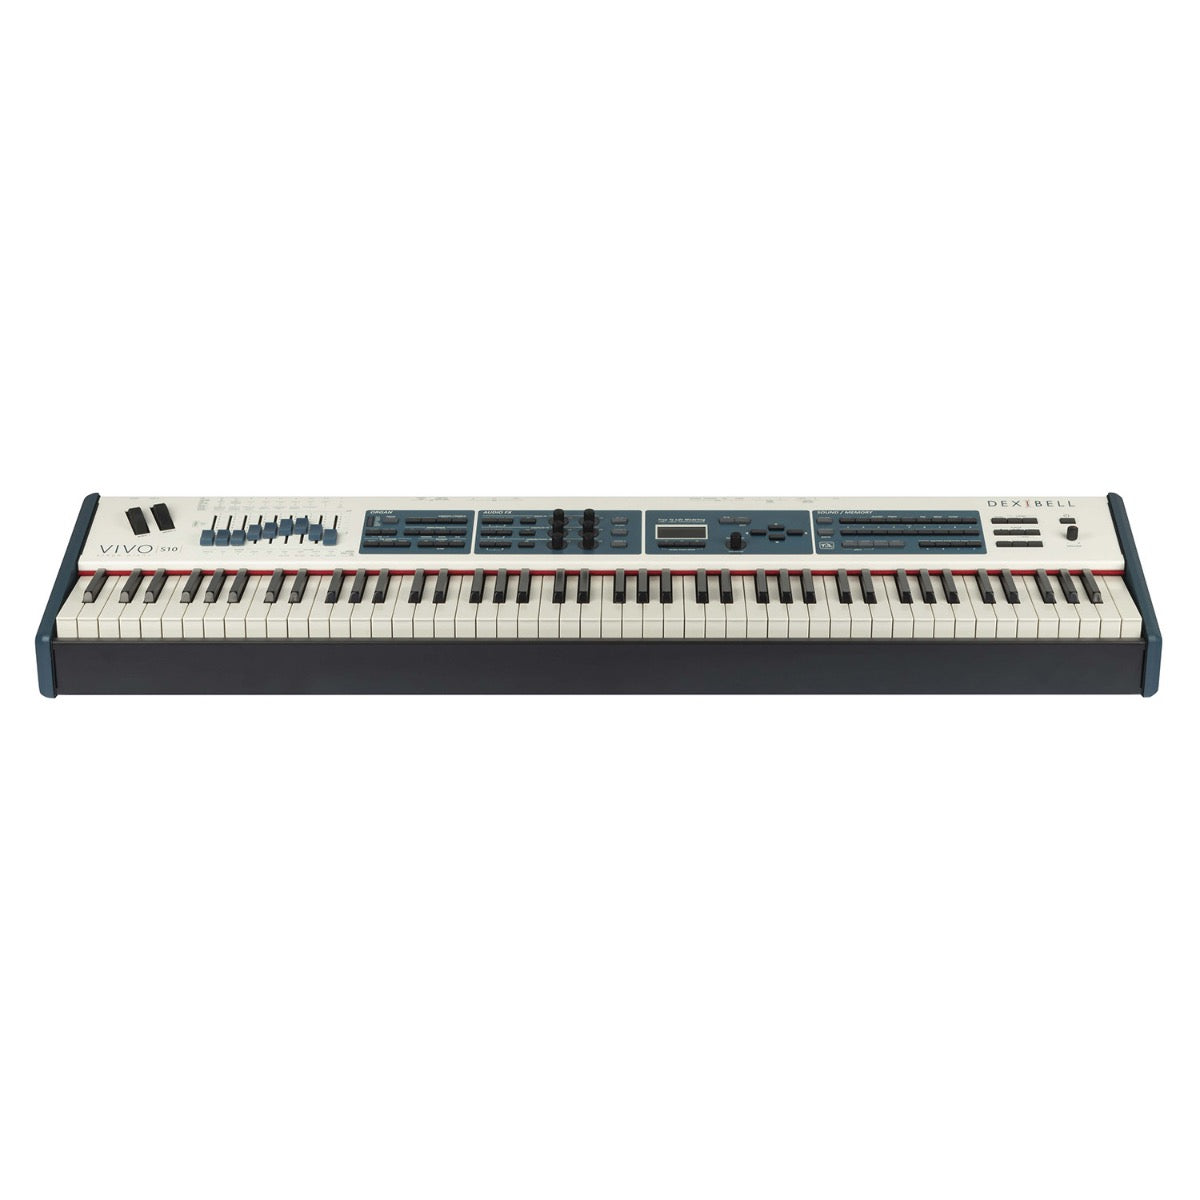 Dexibell VIVO S10 88-Note Stage Piano, View 1